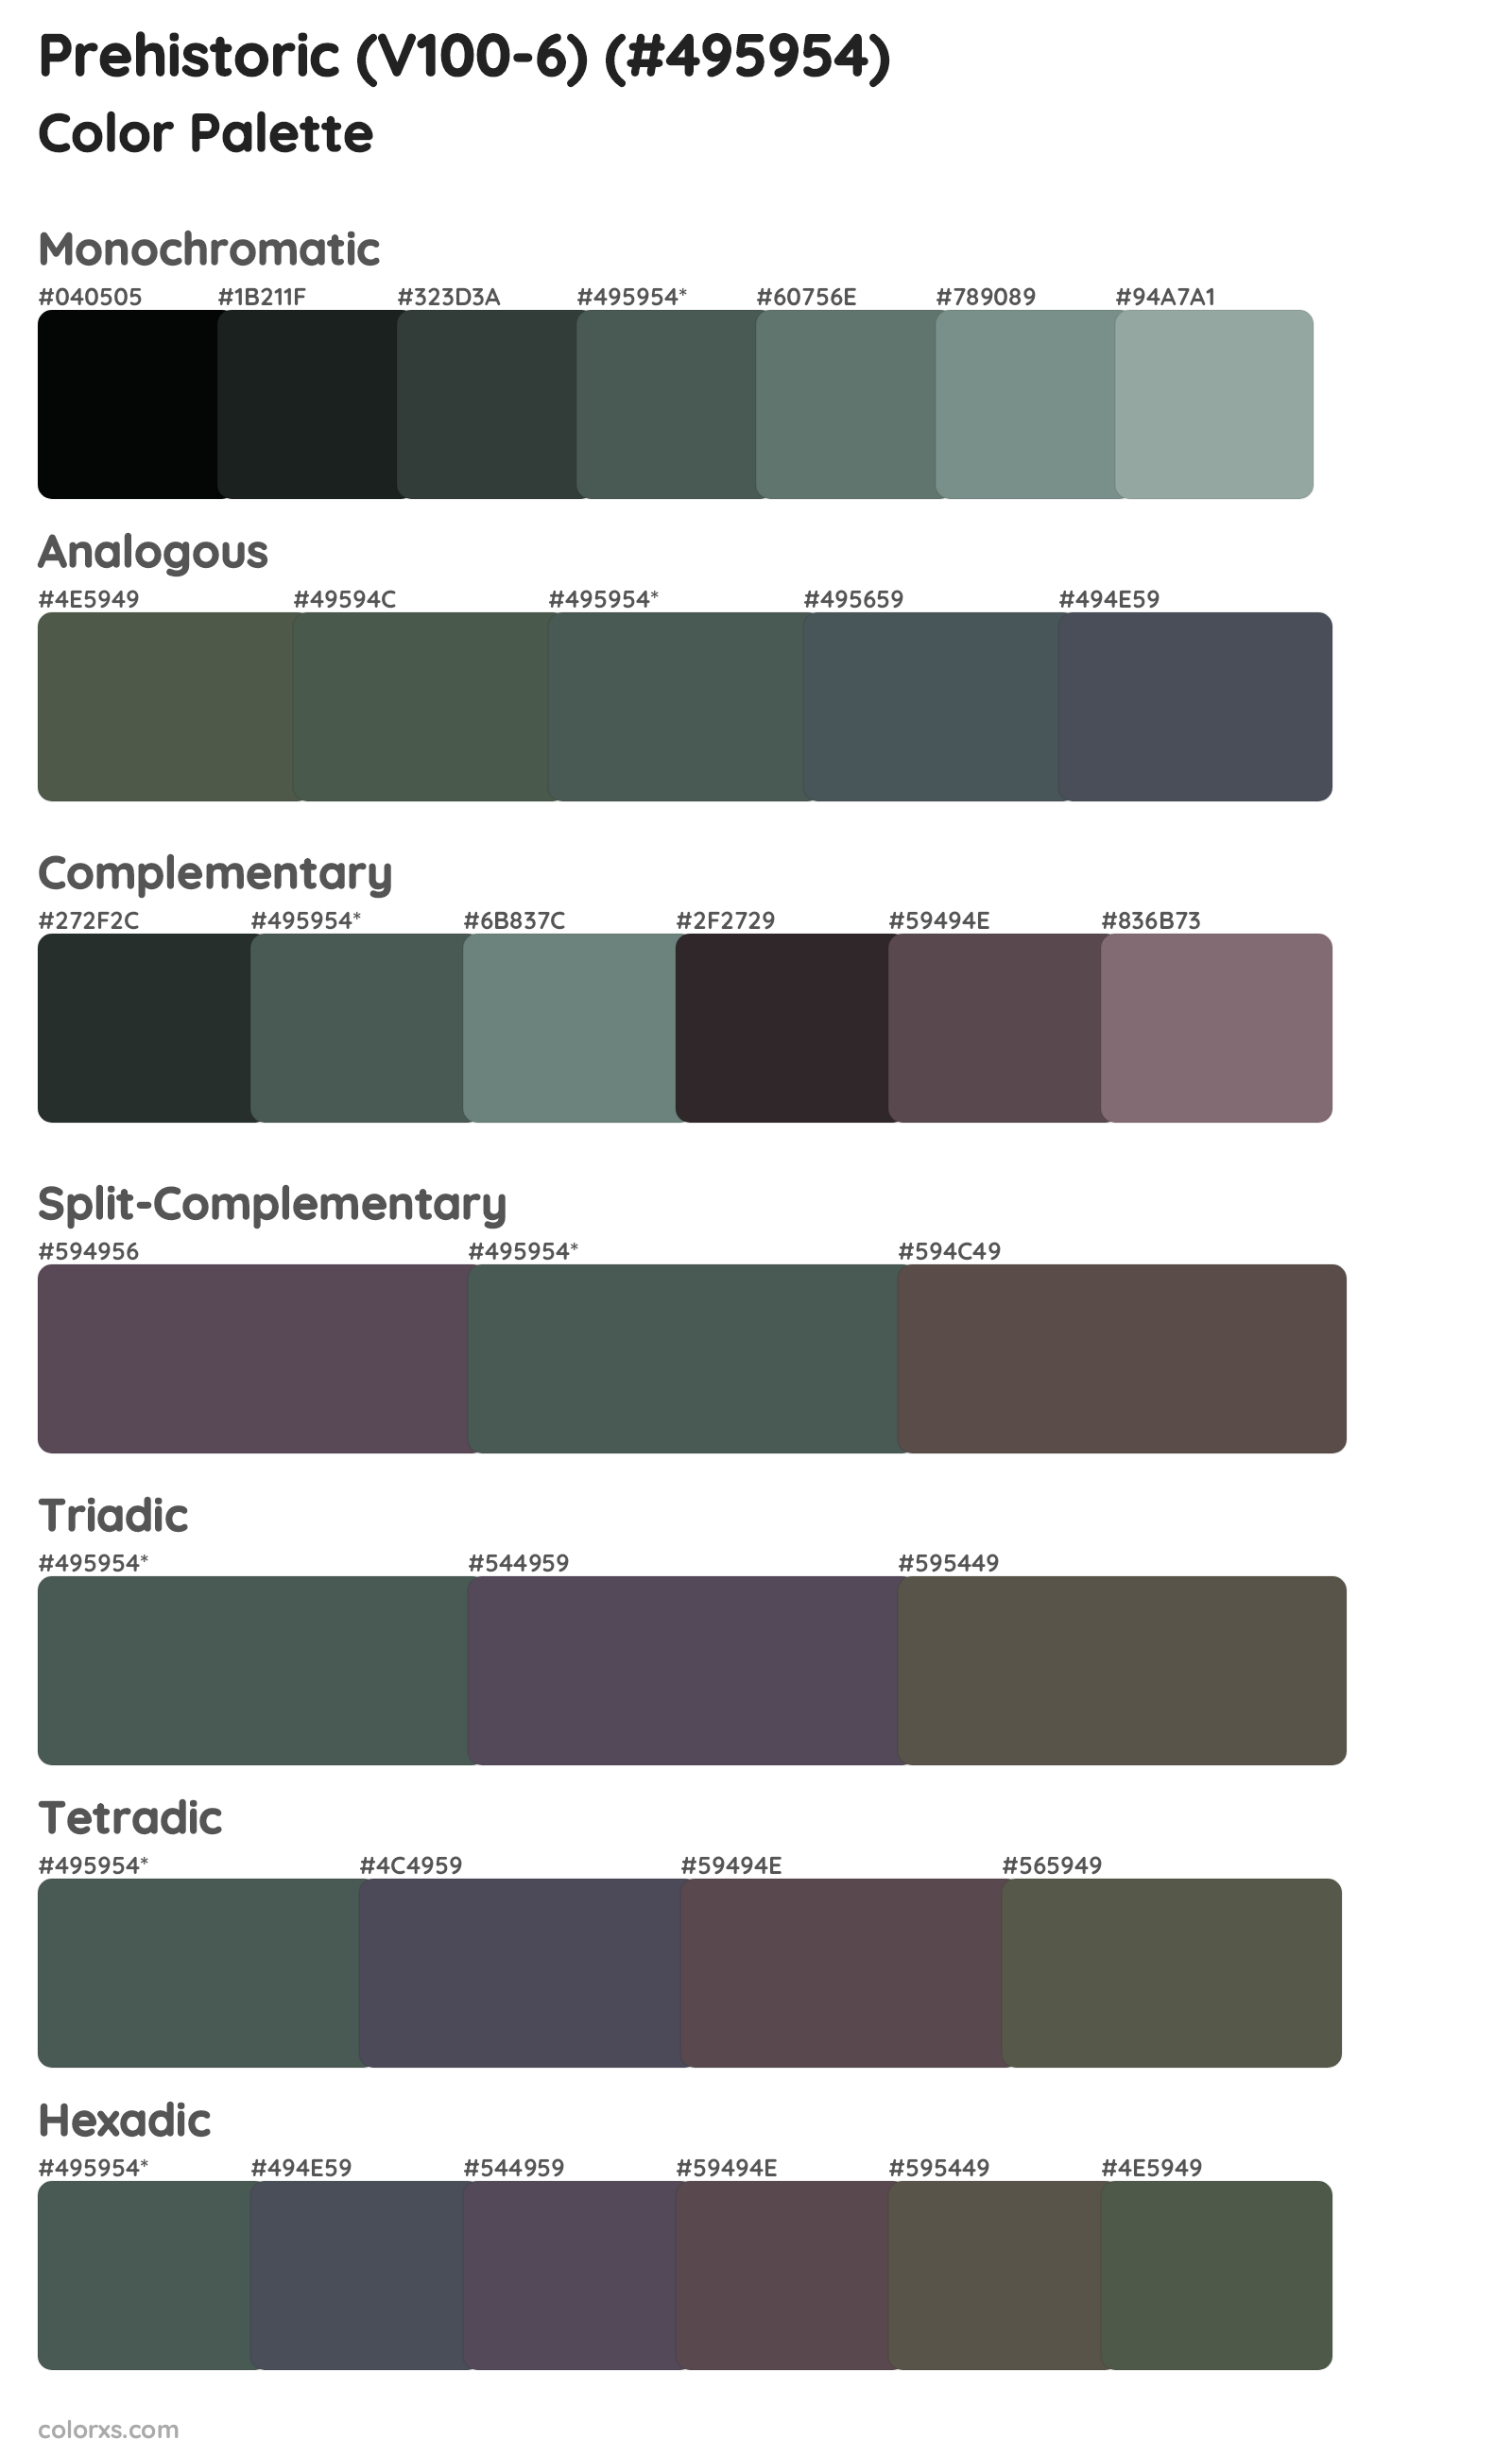 Prehistoric (V100-6) Color Scheme Palettes